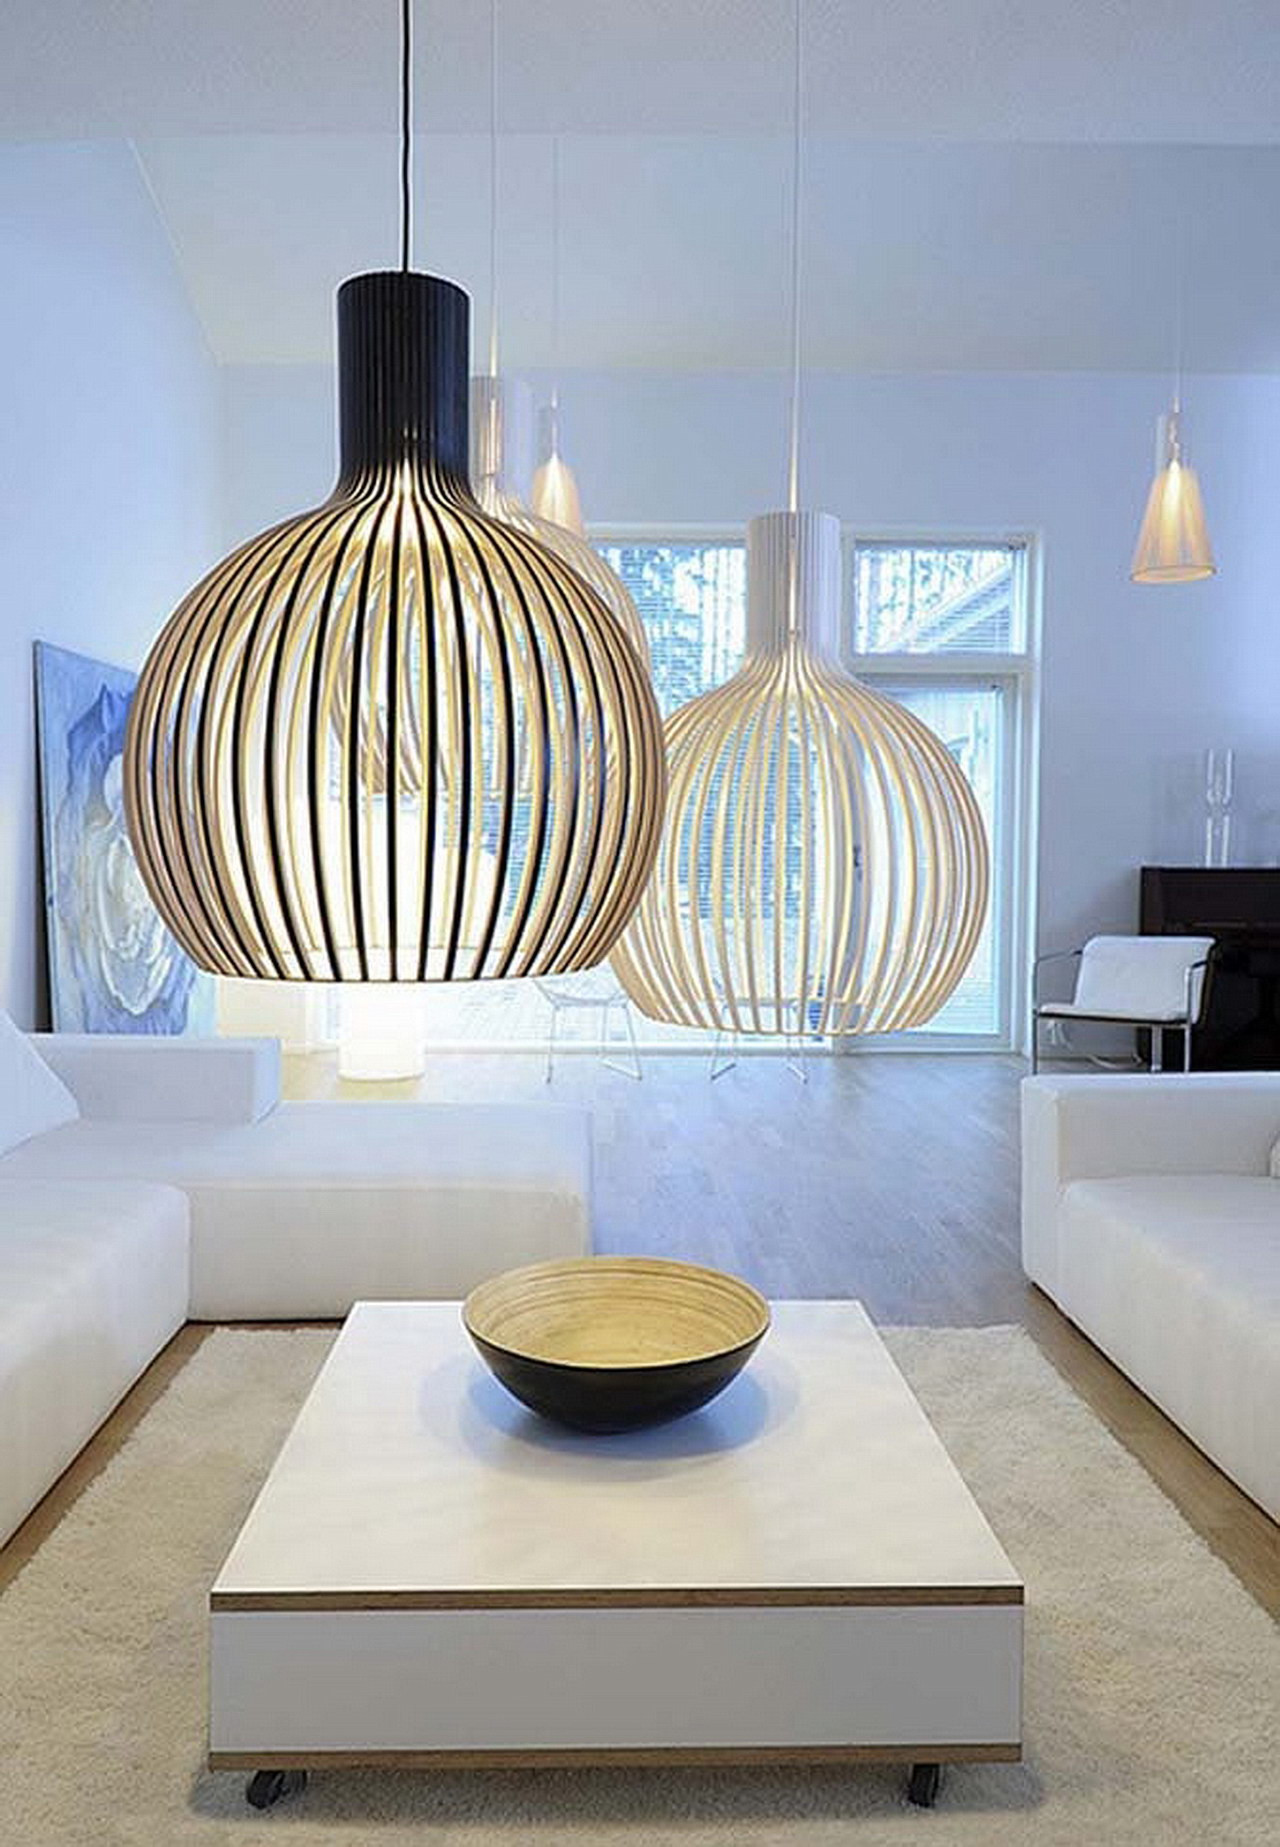 Living Room Lights Design
 77 really cool living room lighting tips tricks ideas